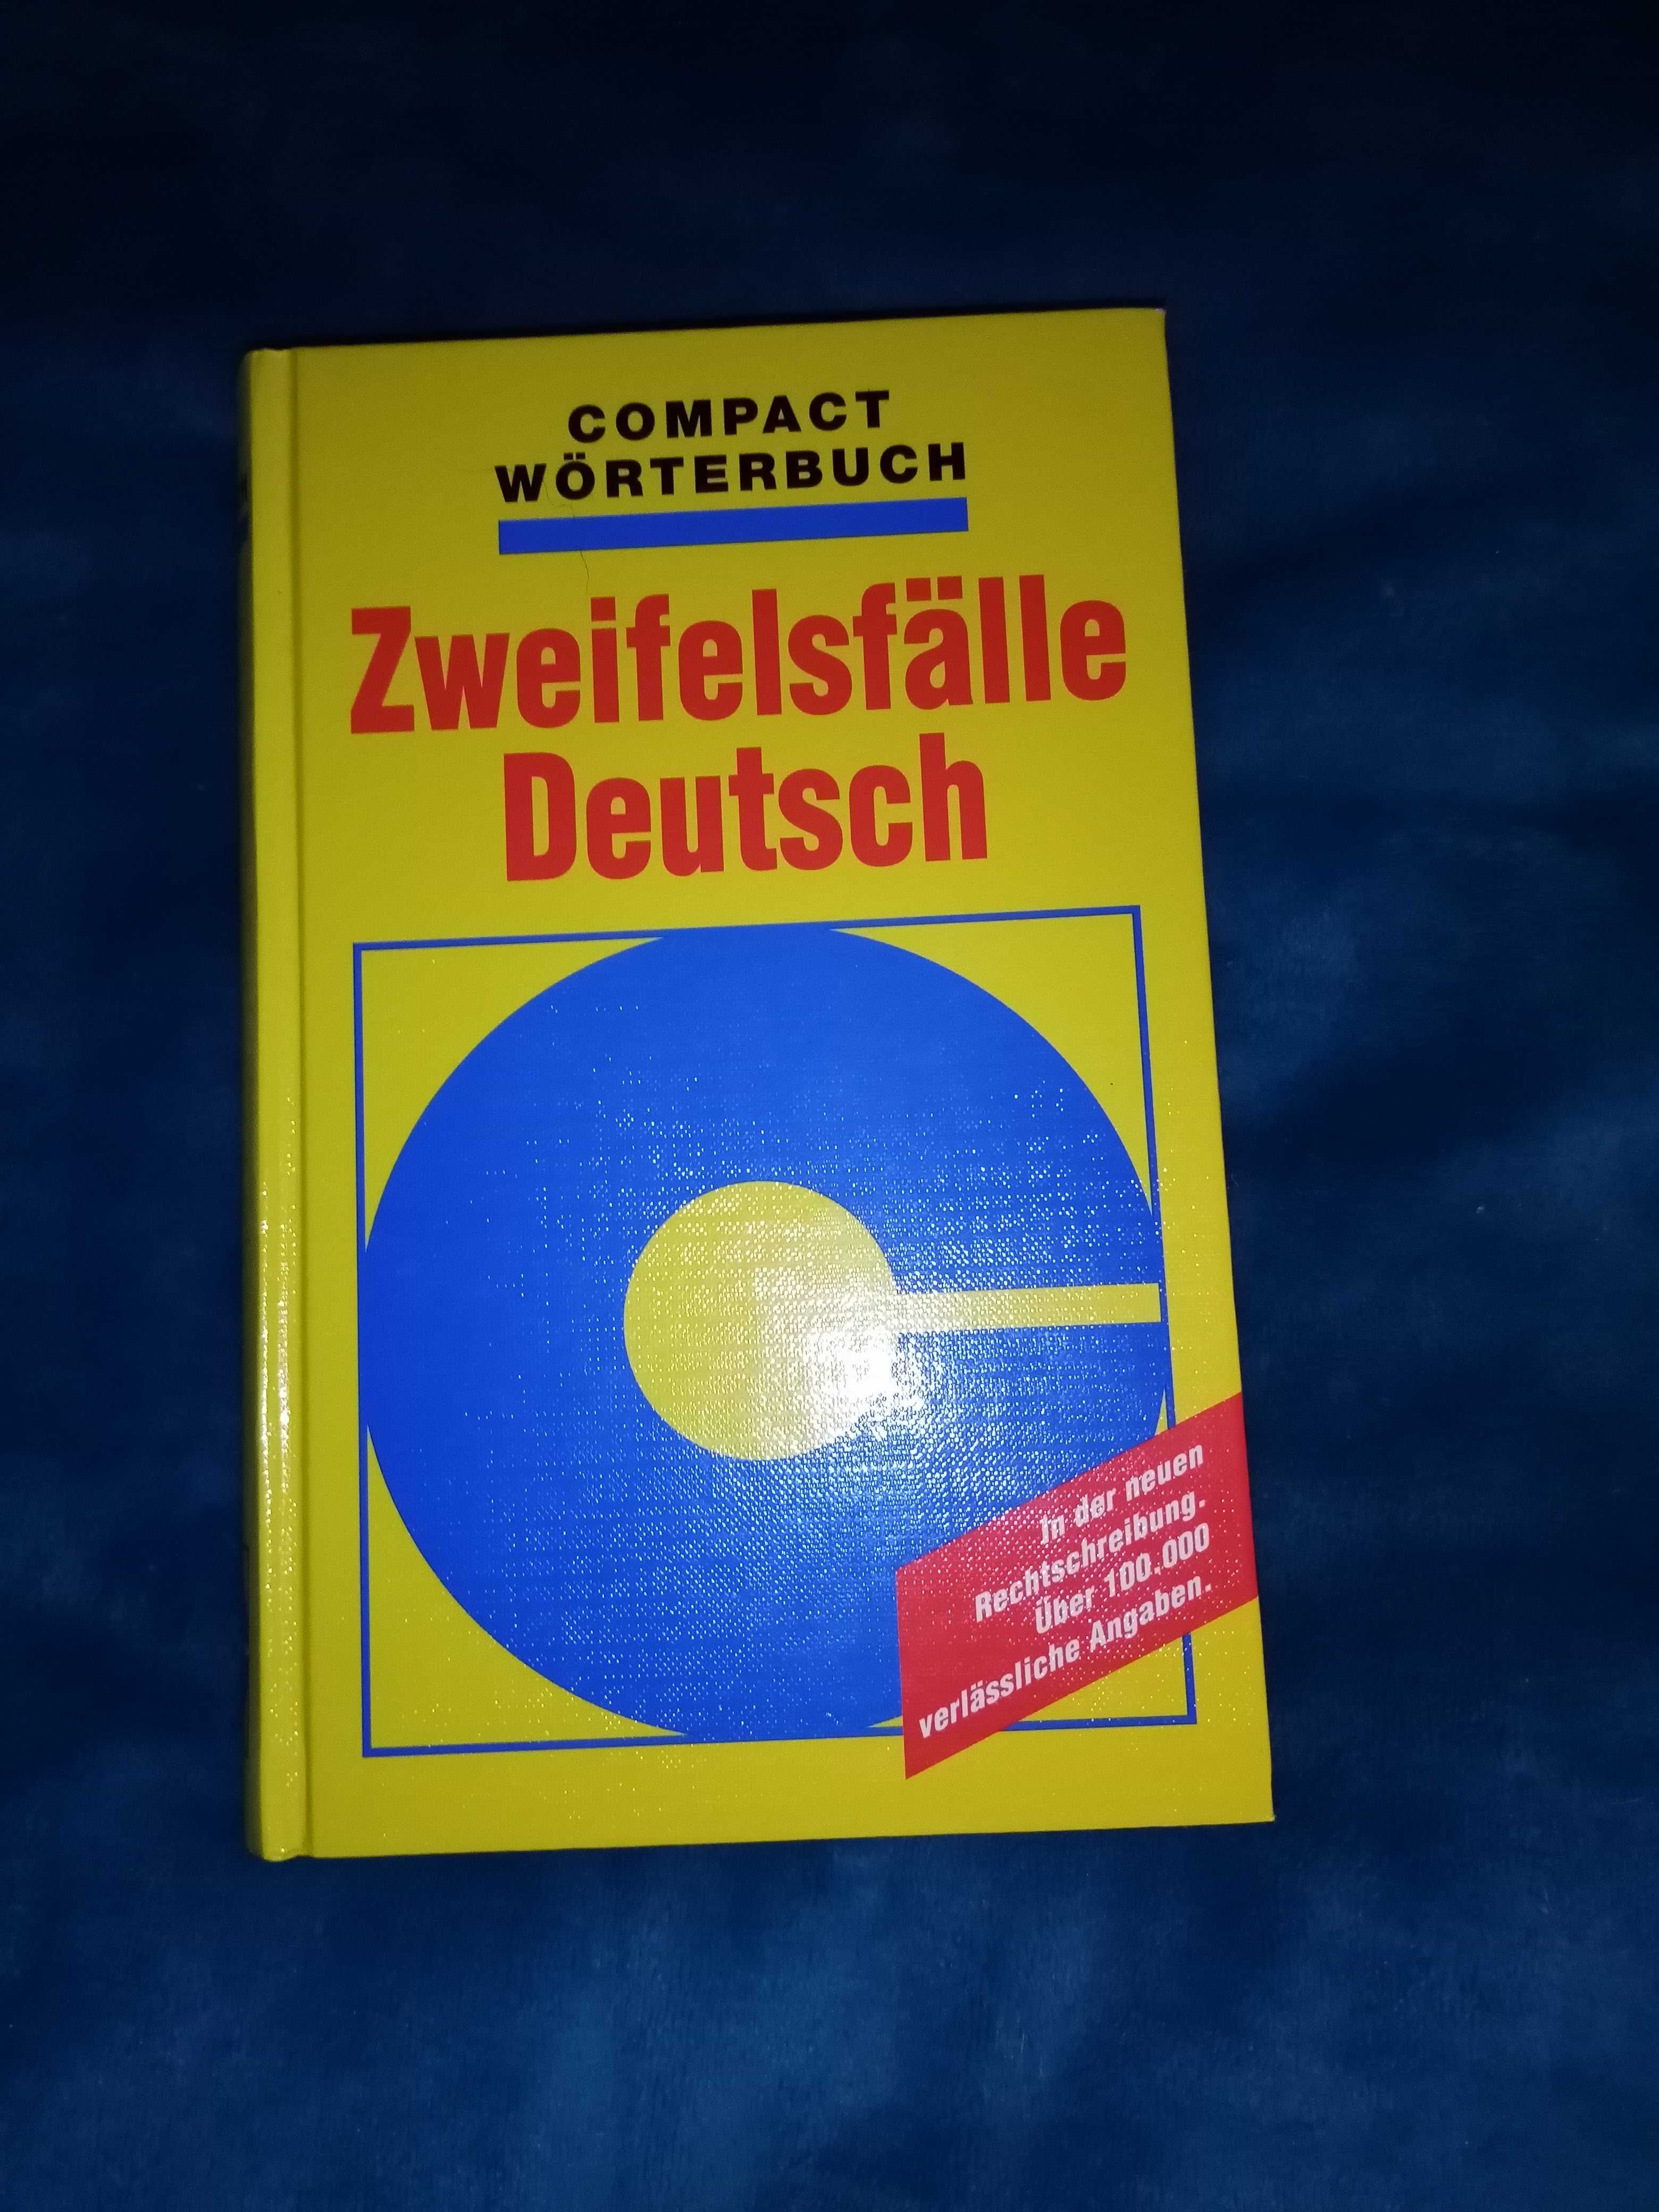 Compact Wörterbuch Zweifelsfälle Deutsch